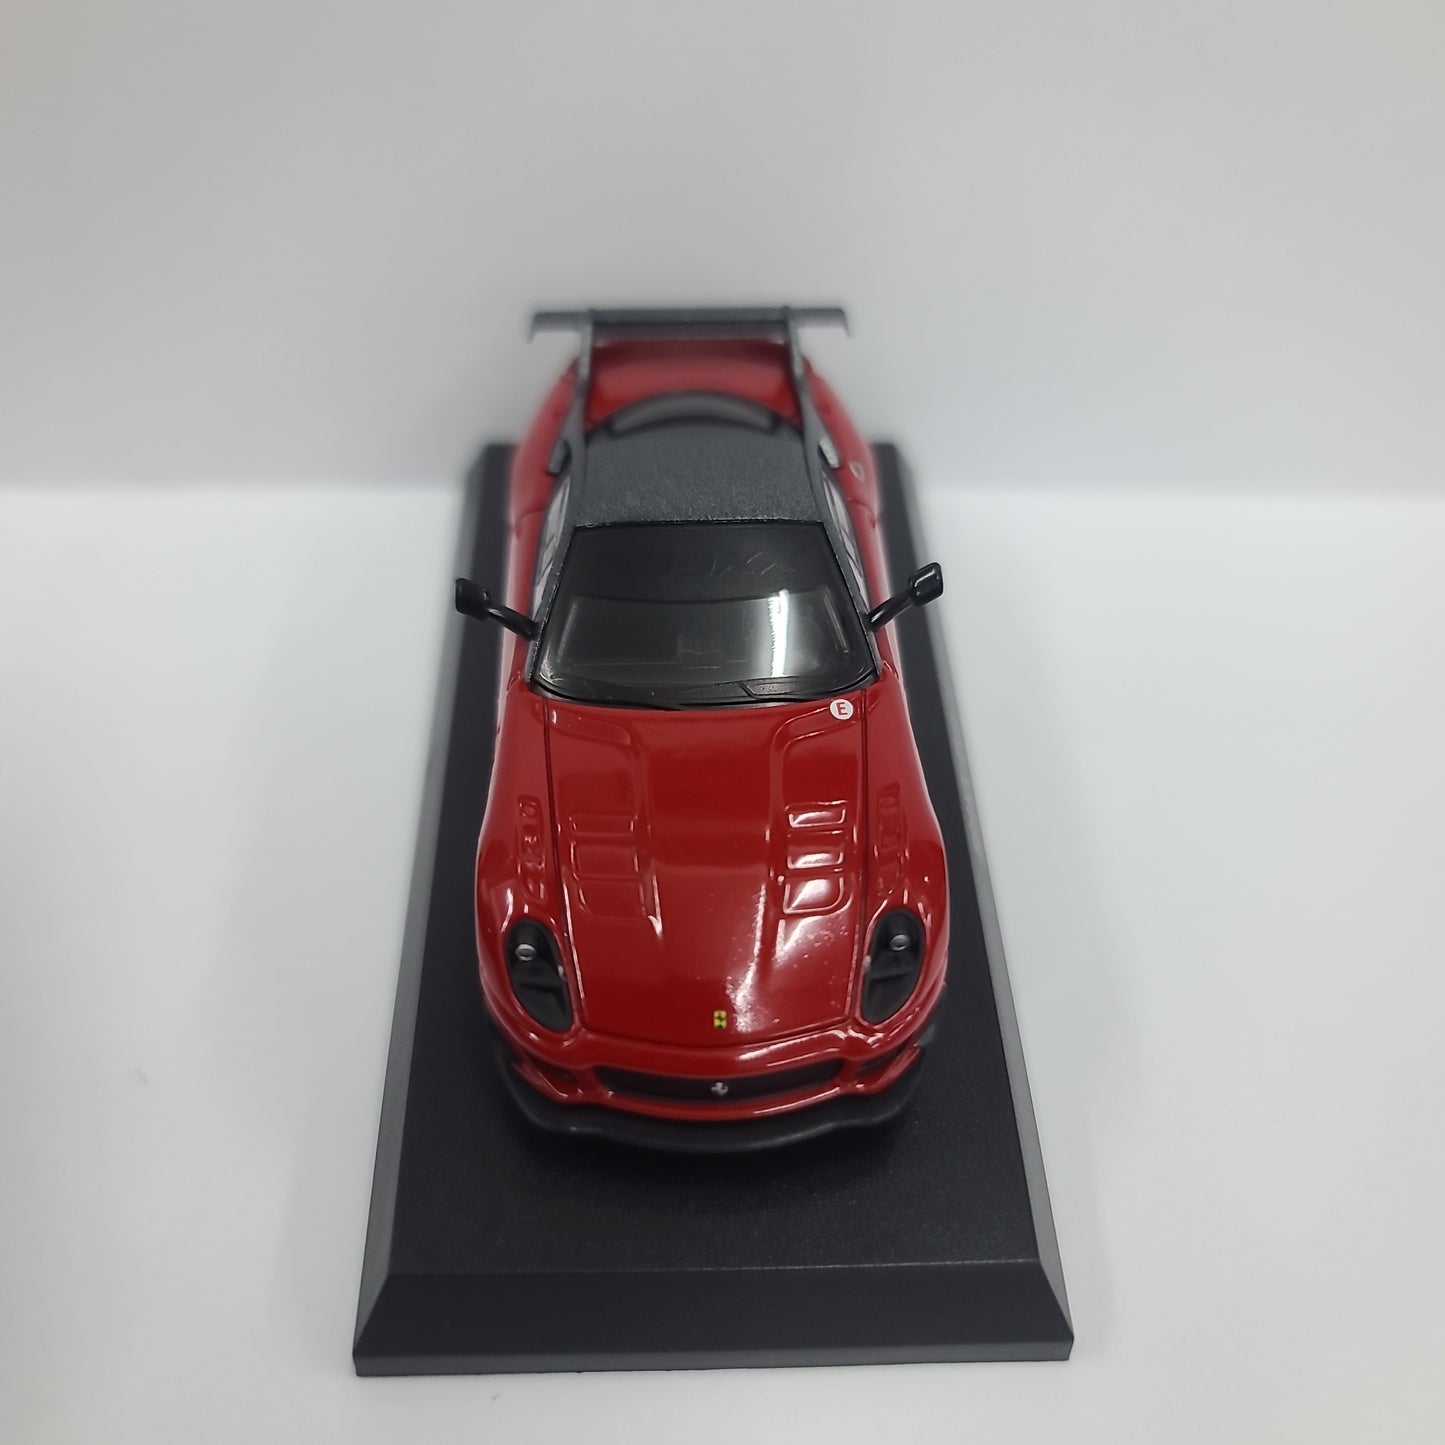 Kyosho 1:64 Scale Ferrari Mini Car Collection 12 Neo 599xx EVO